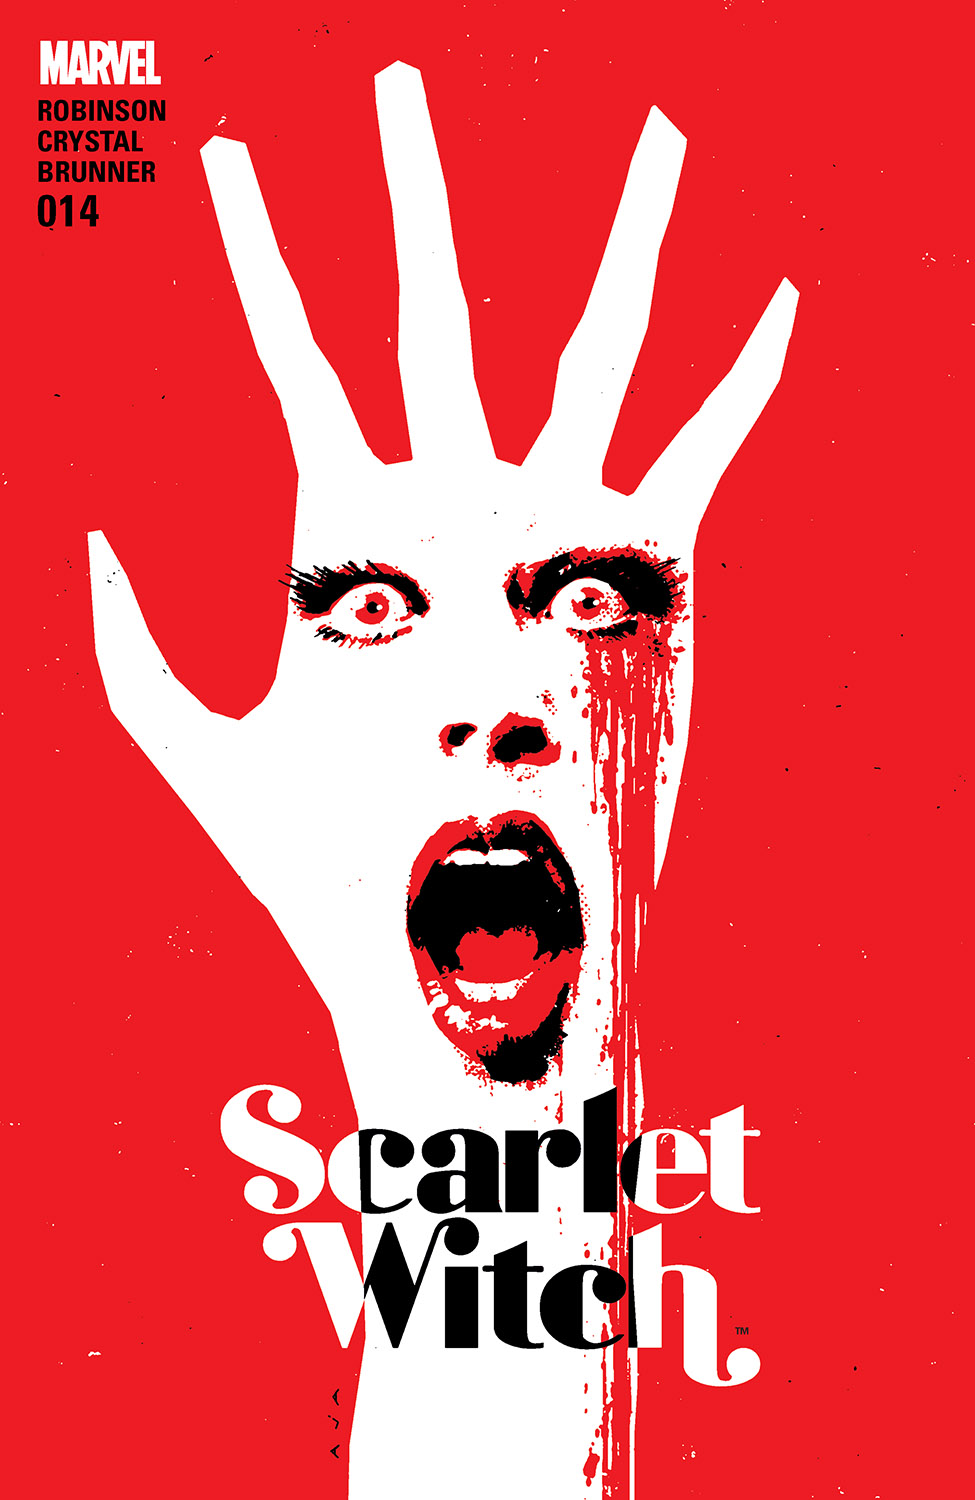 Scarlet Witch (2015) #14